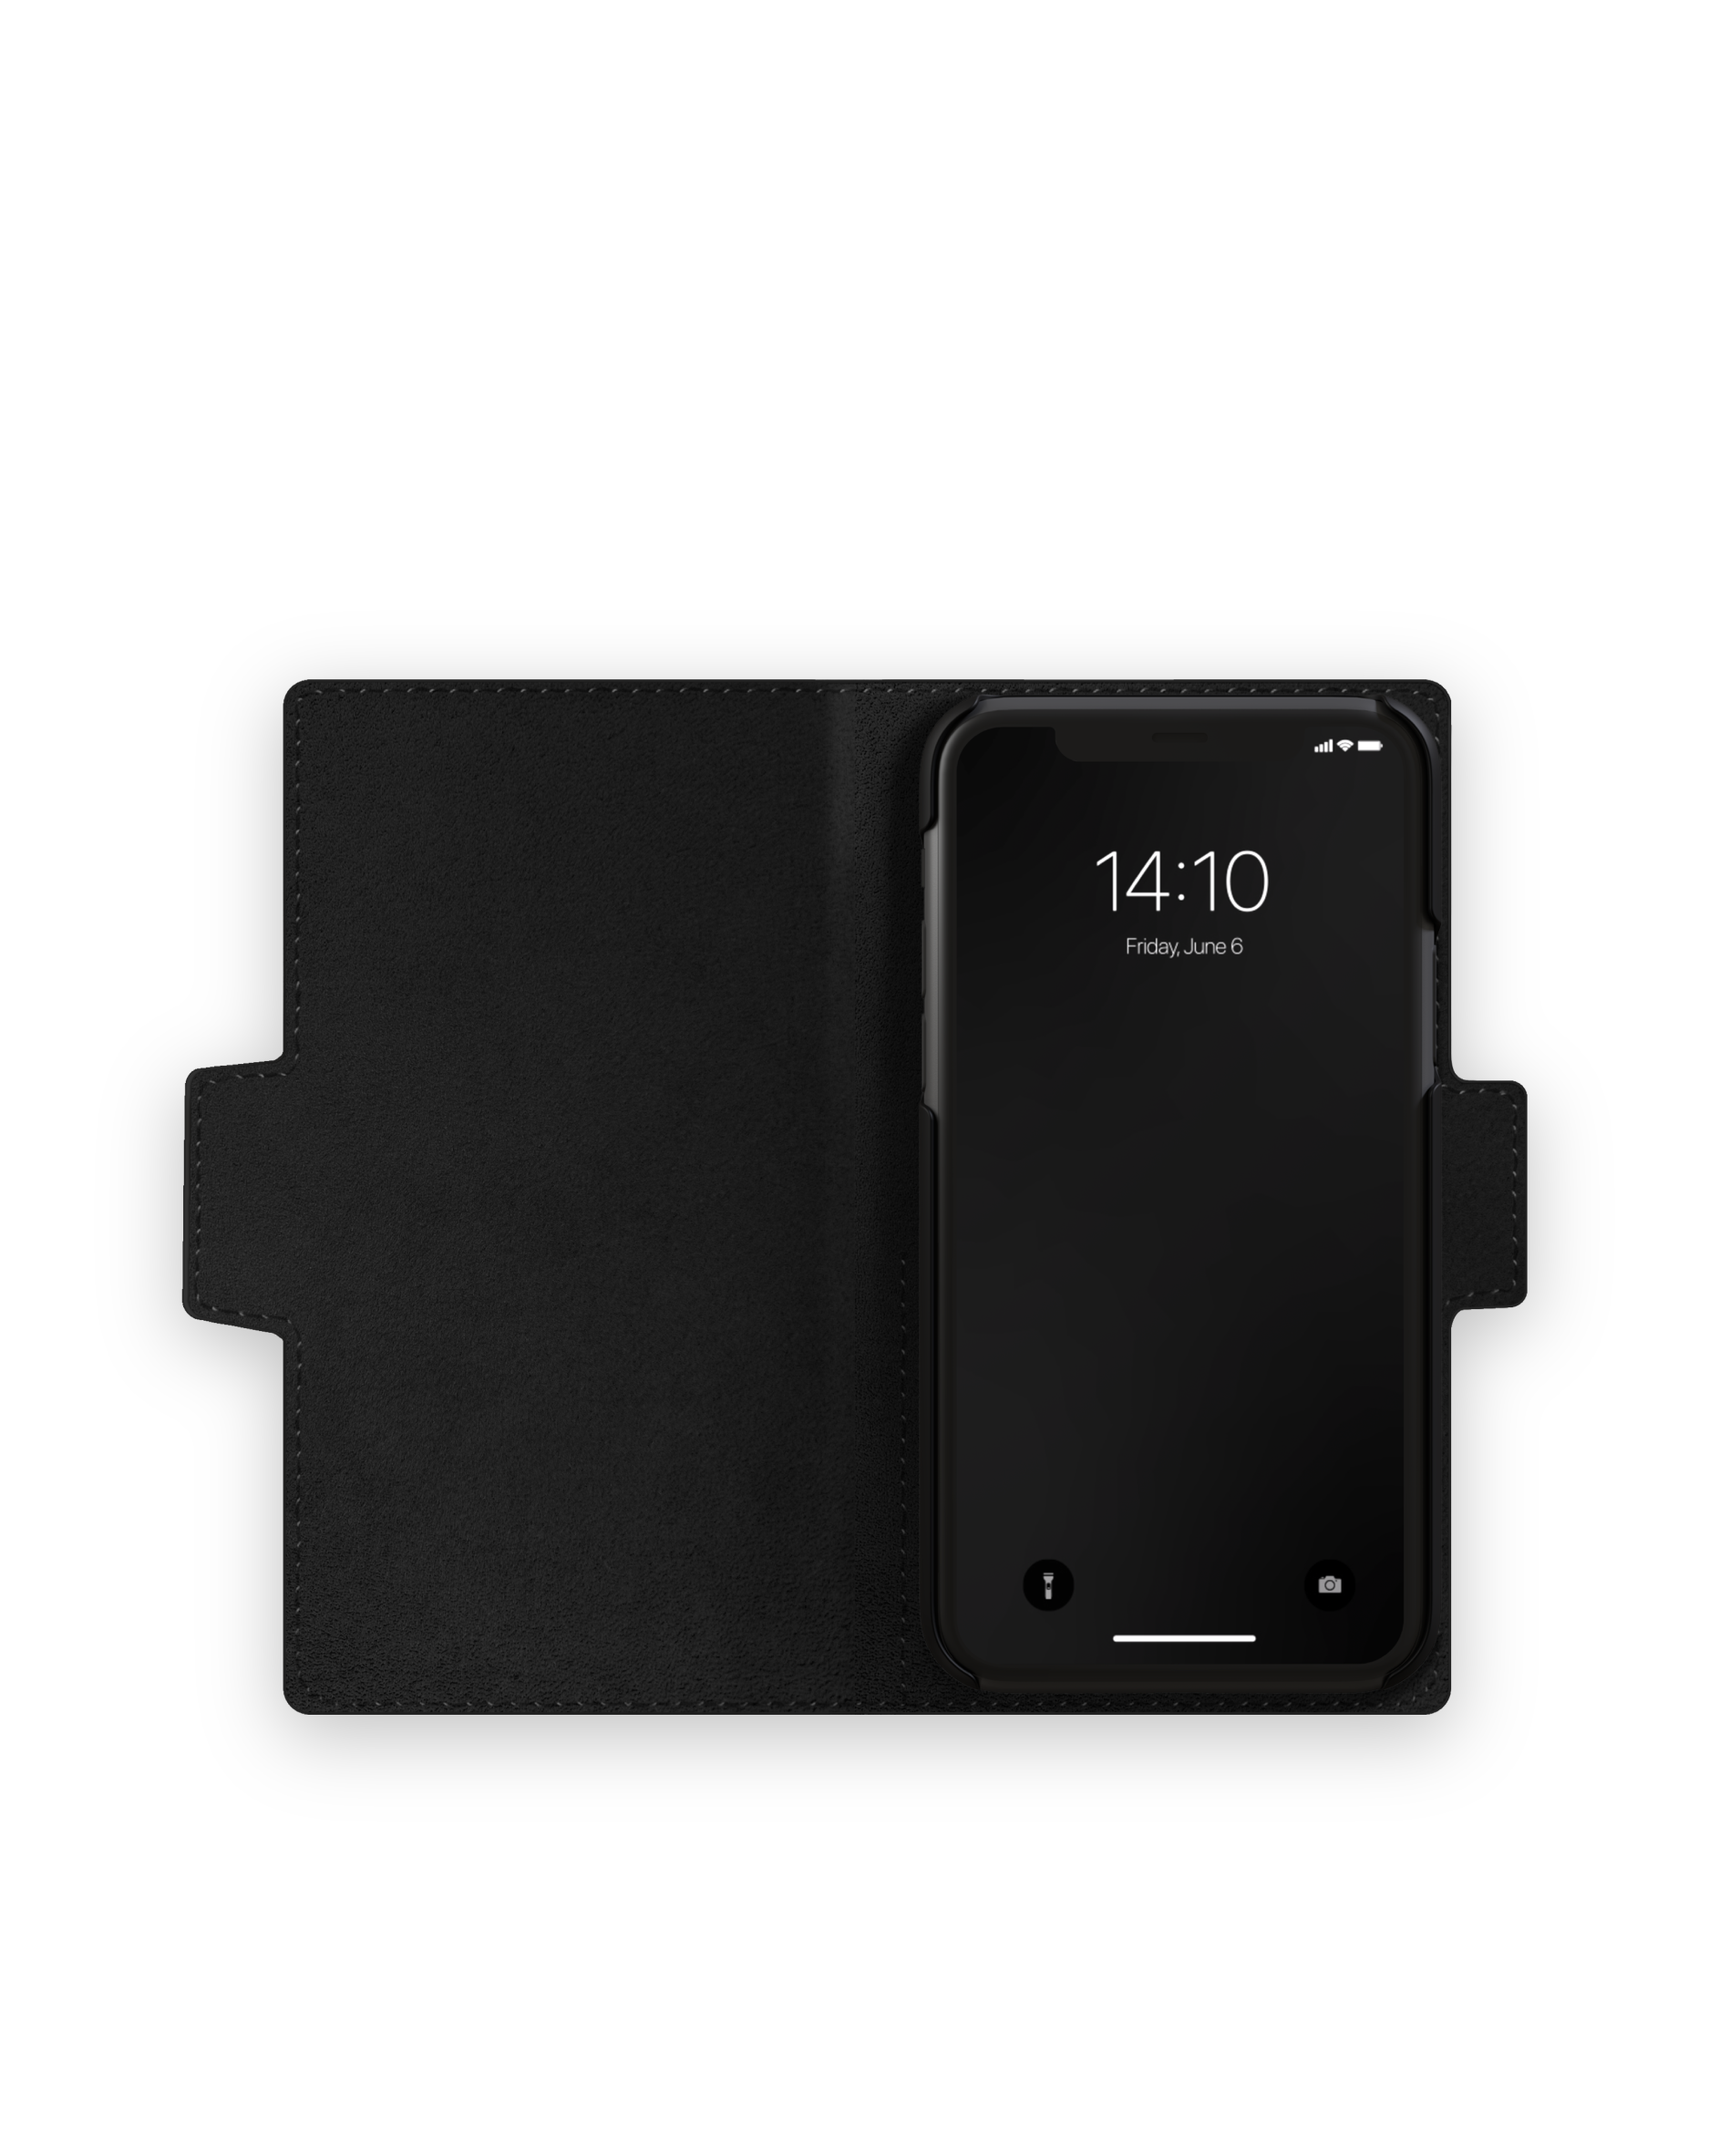 Bookcover, 13 iPhone Apple, IDEAL OF Noir Croco Mini, IDAW-I2154-236, Neo SWEDEN